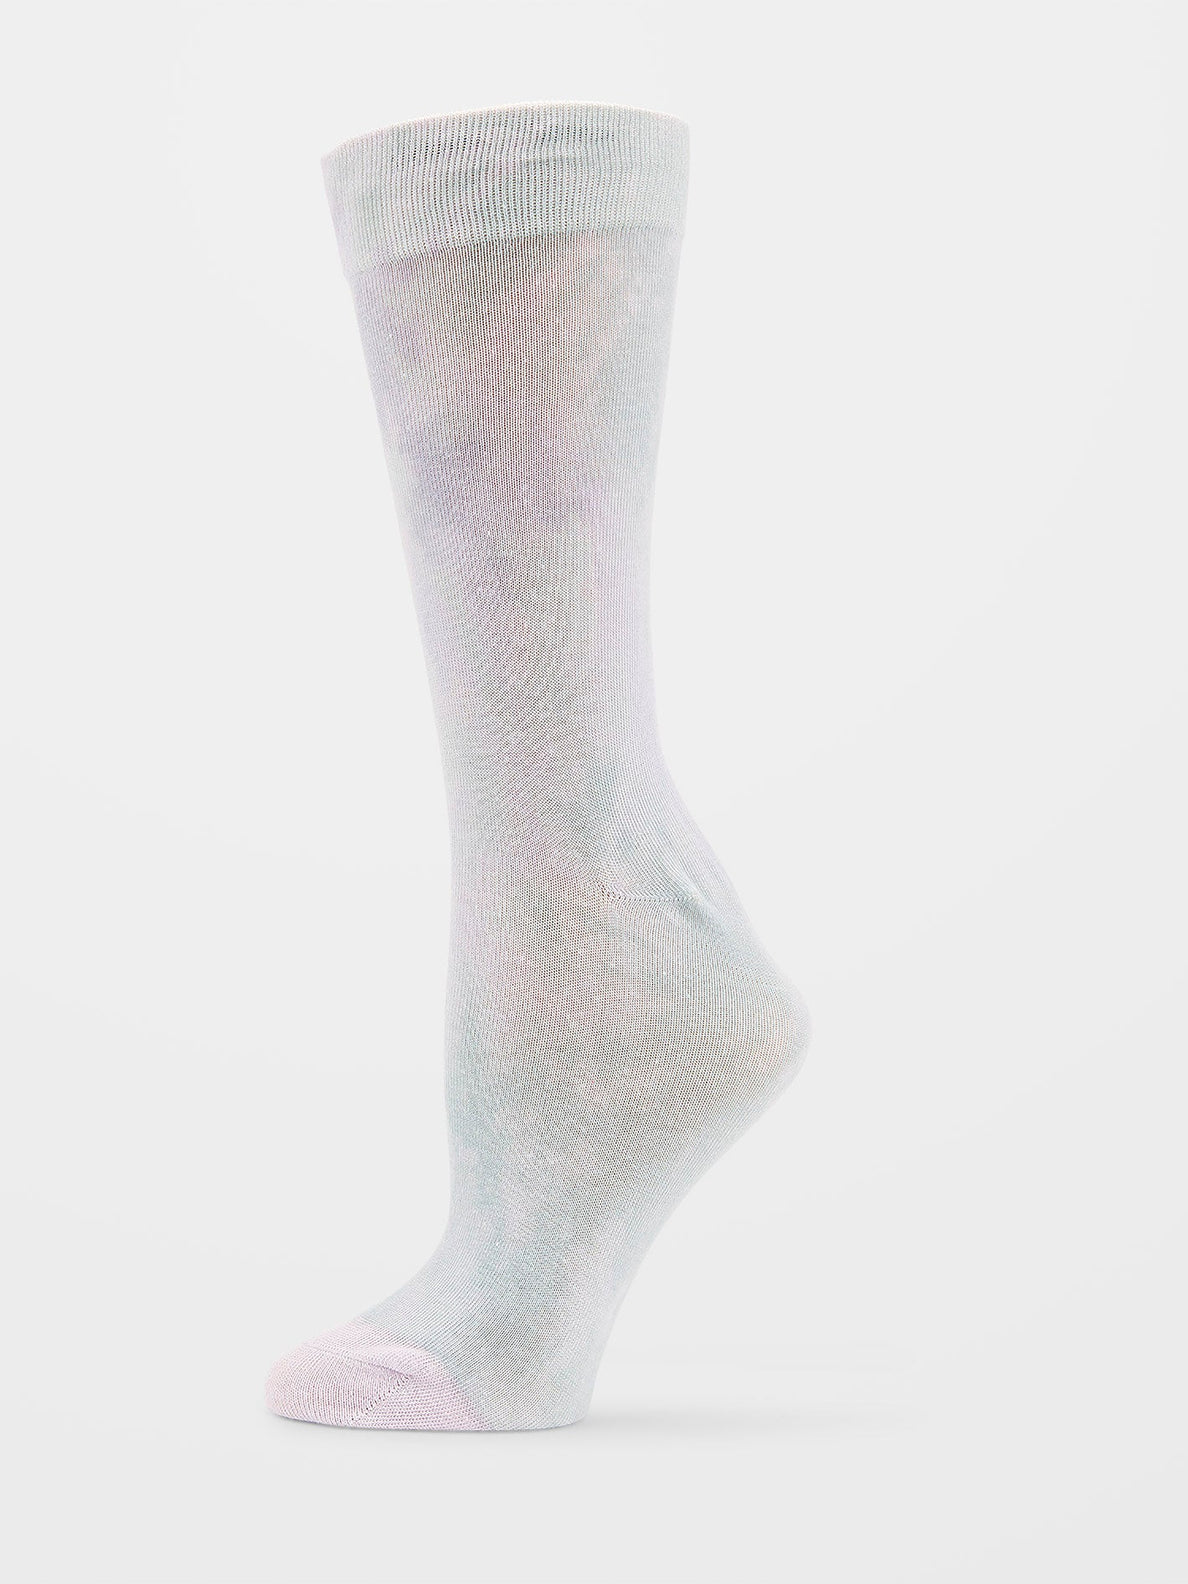 Truly Stoked Socks - STONE BLUE (E6332201_SNB) [1]